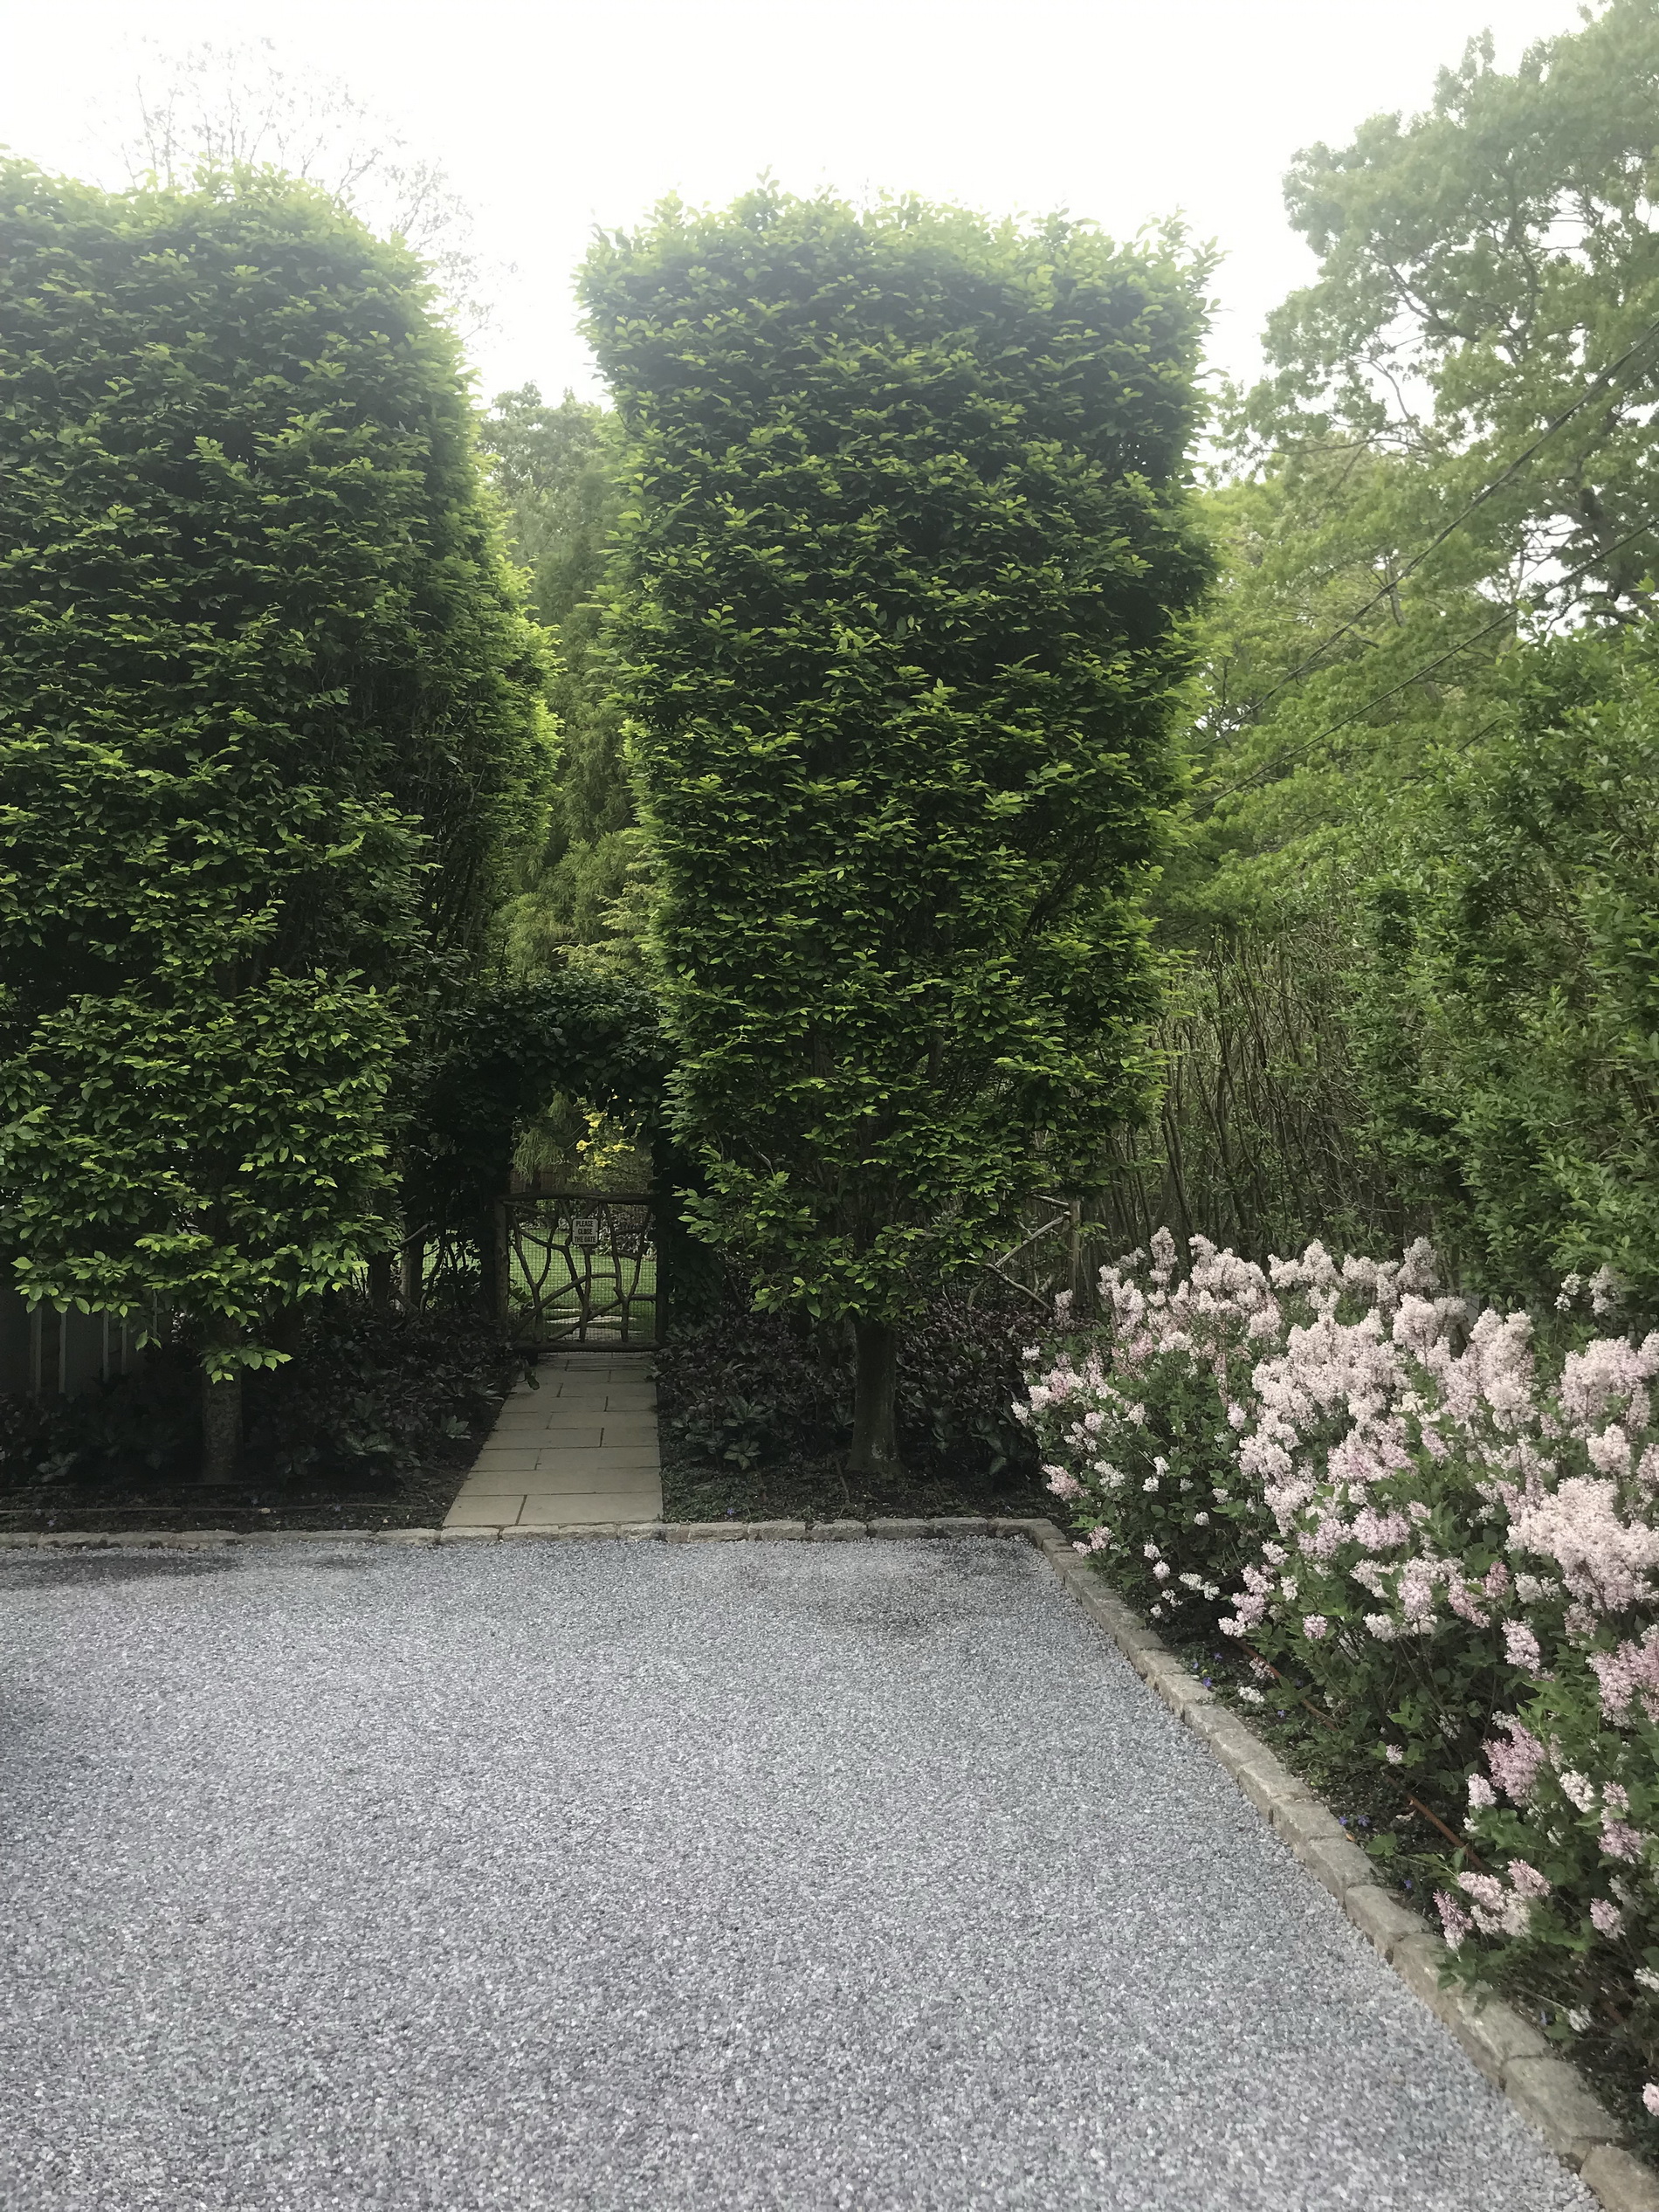 Garden in Wainscott, New York